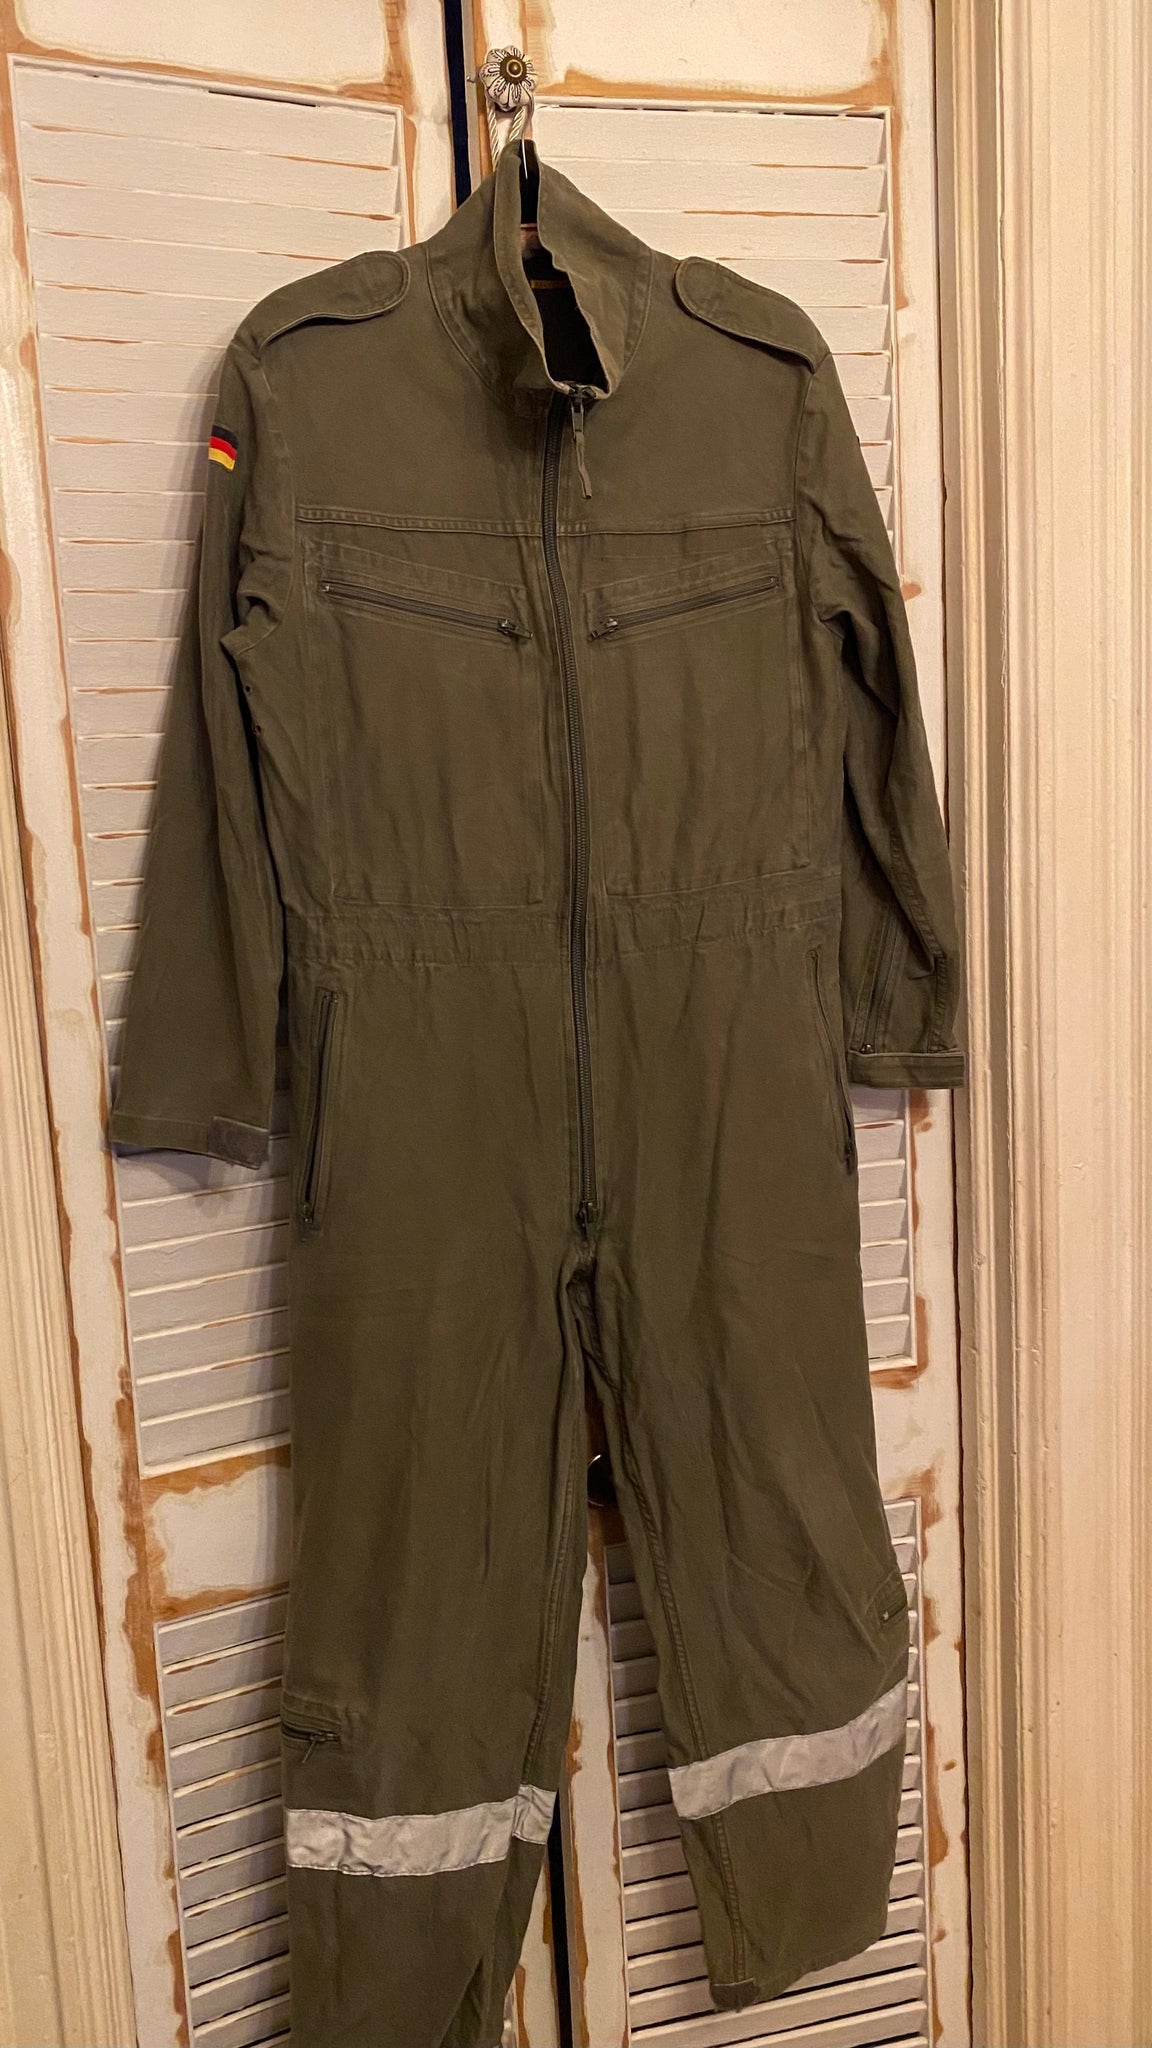 Vintage Flight Suit size M military Jumpsuit Eye on back